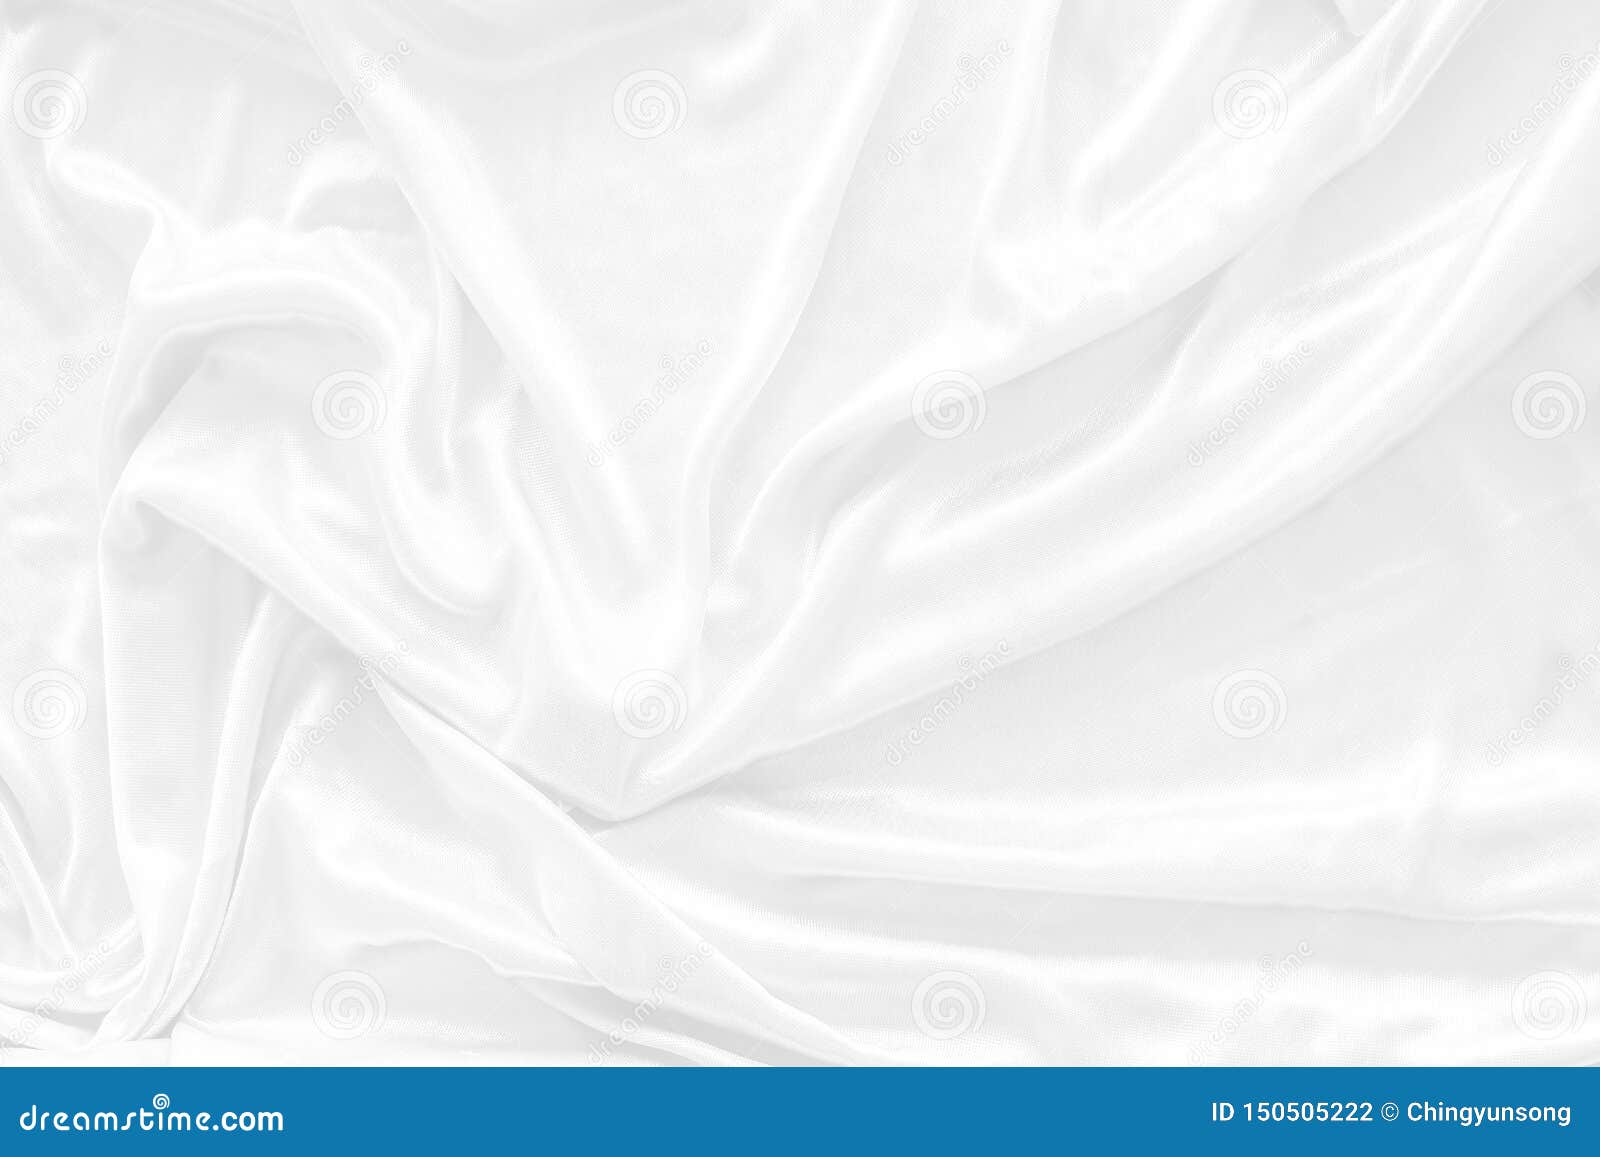 71 739 Wallpaper White Elegant Photos Free Royalty Free Stock Photos From Dreamstime